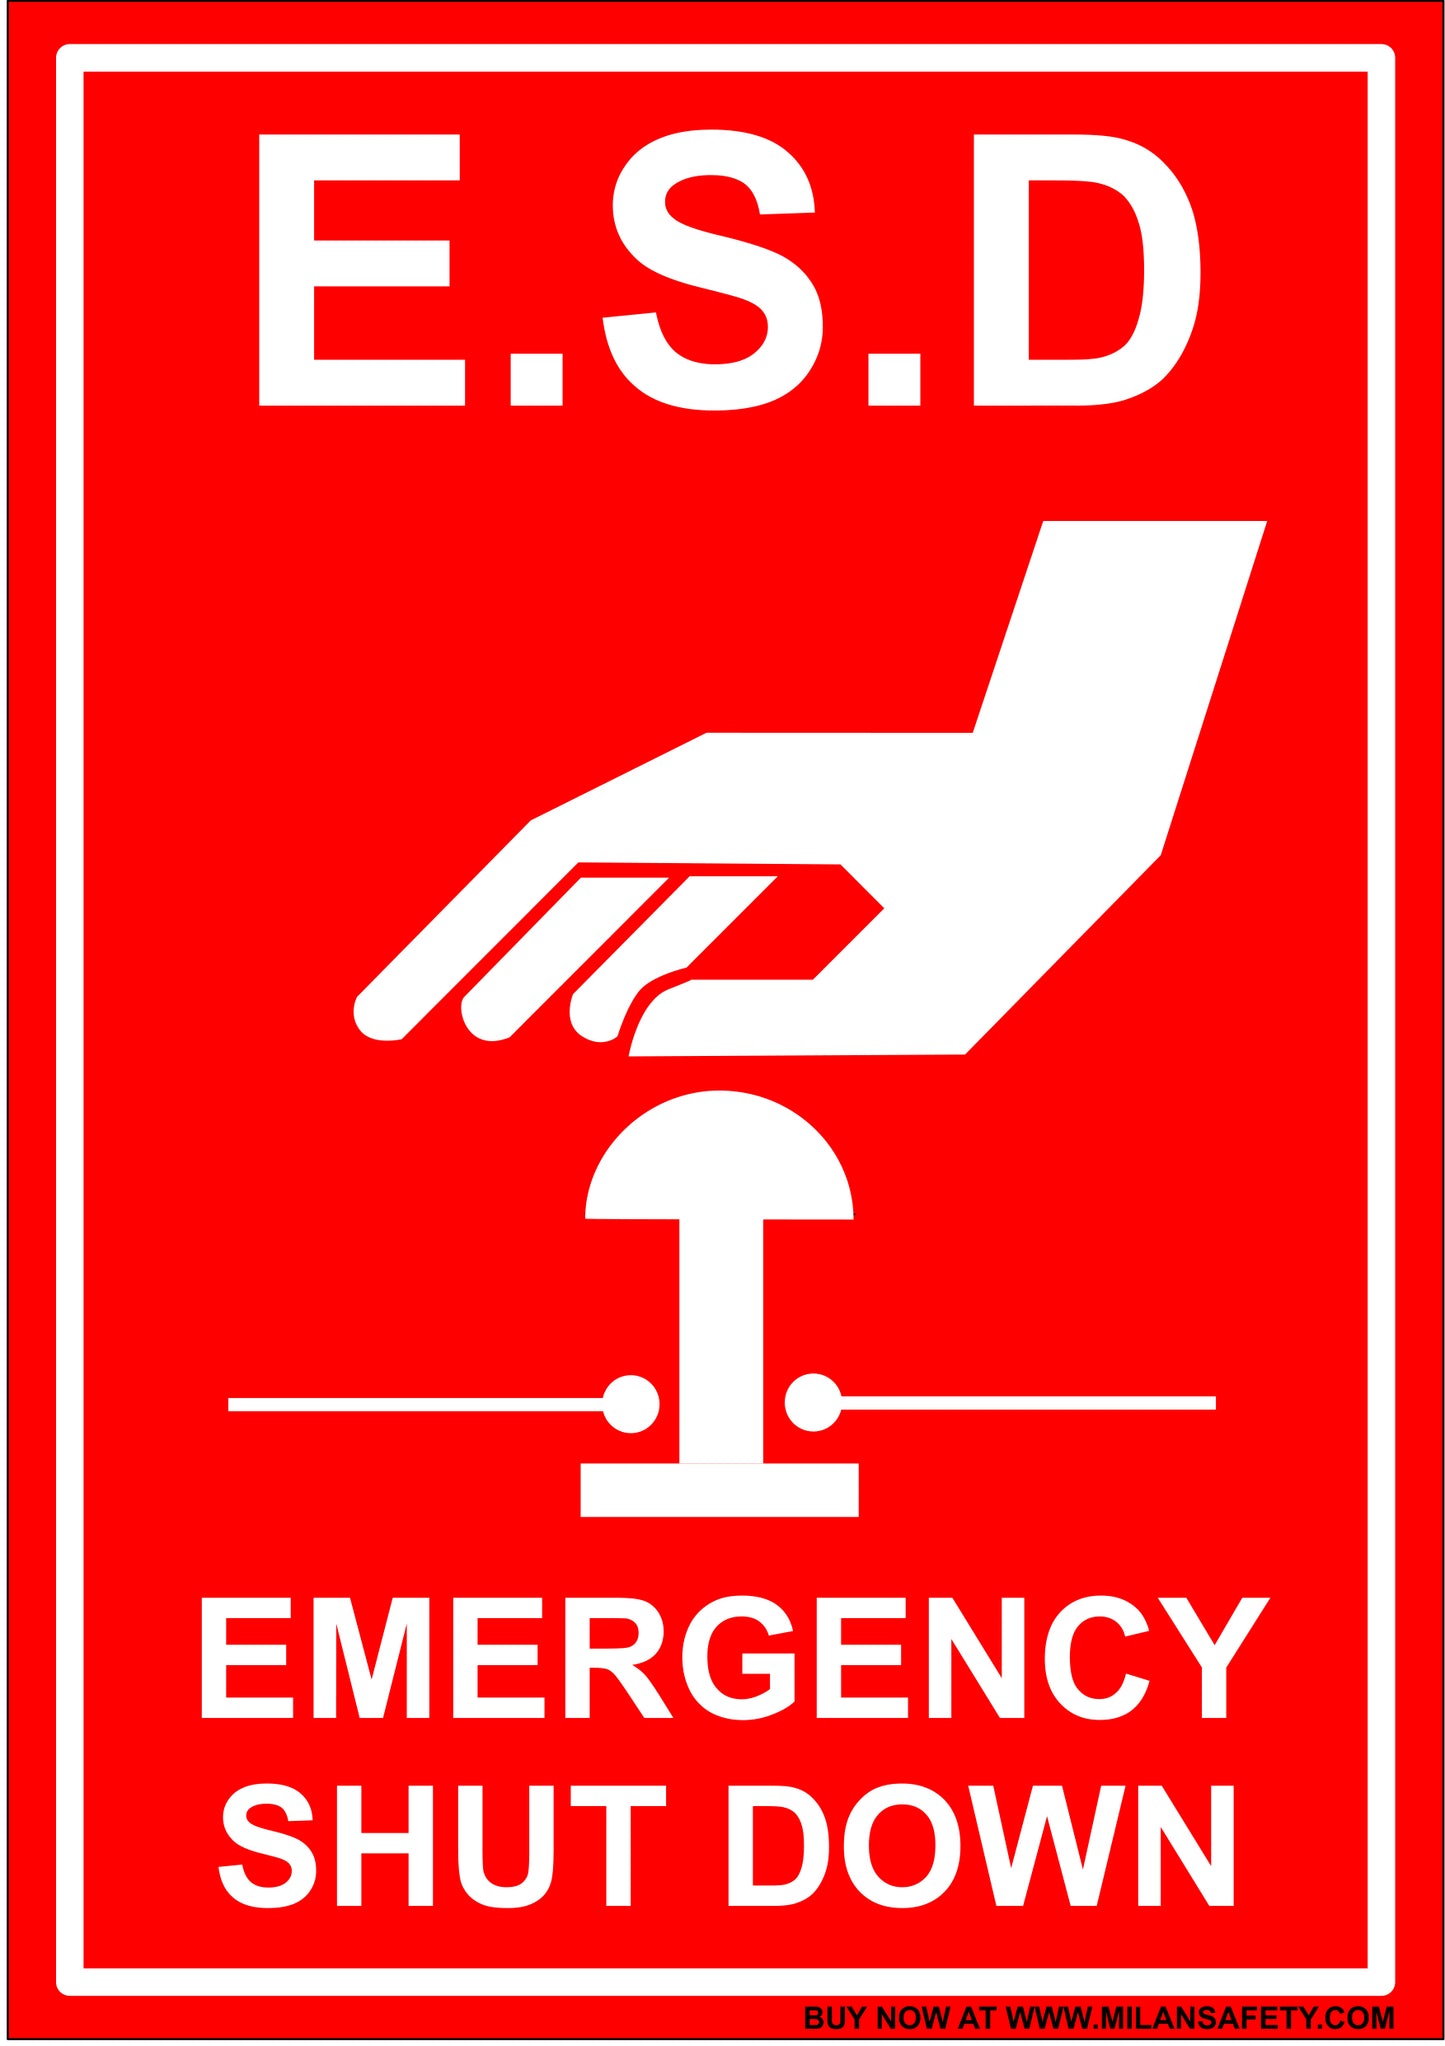 Emergency shut down E.S.D signage